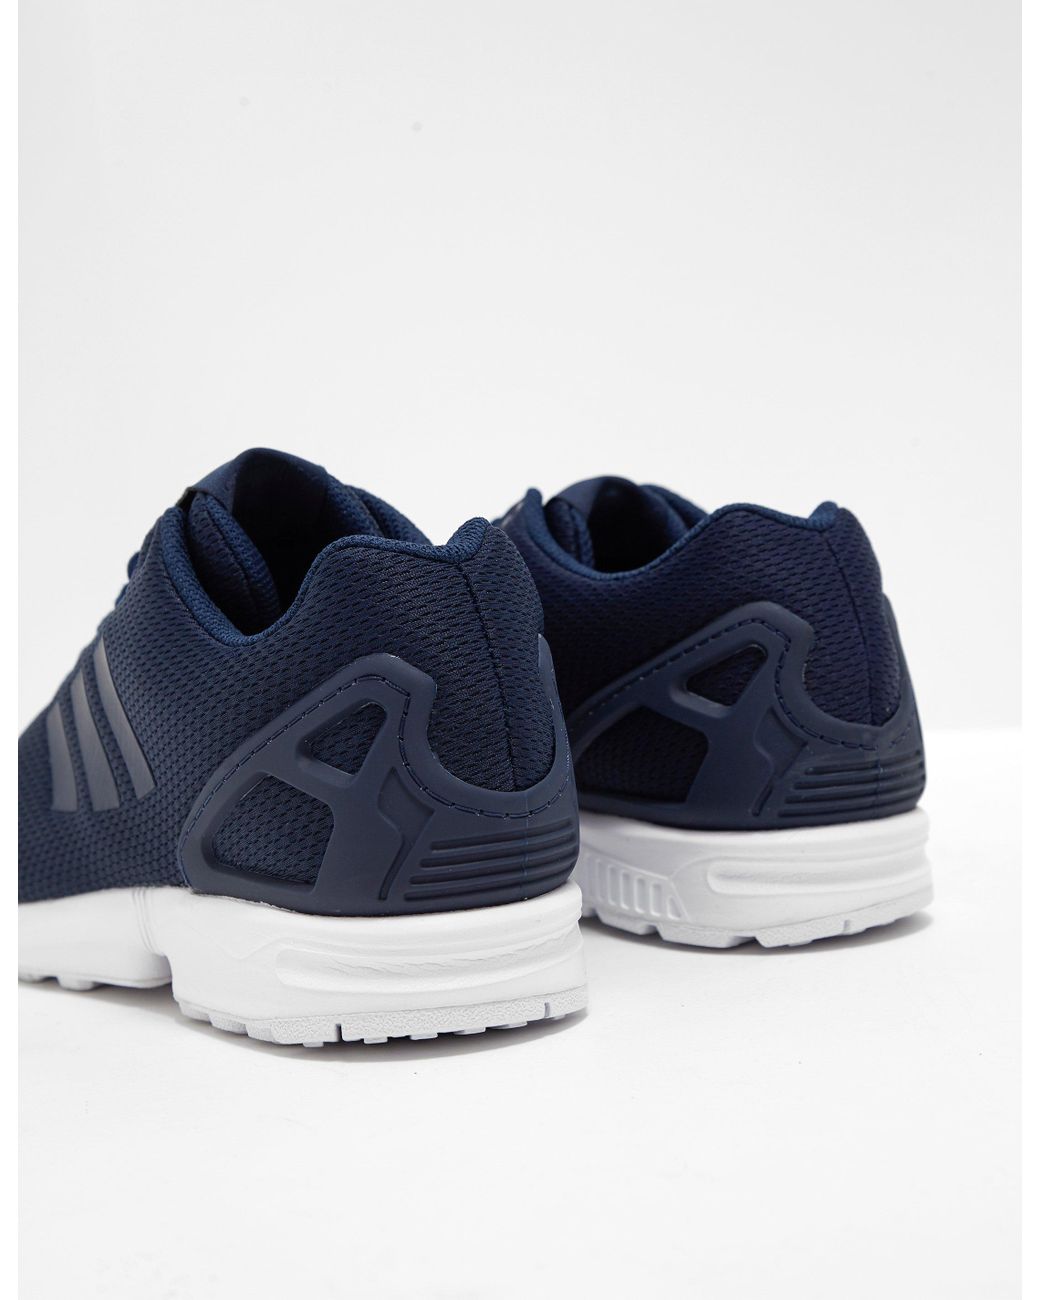 adidas Originals Mens Zx Flux Navy Blue for Men | Lyst